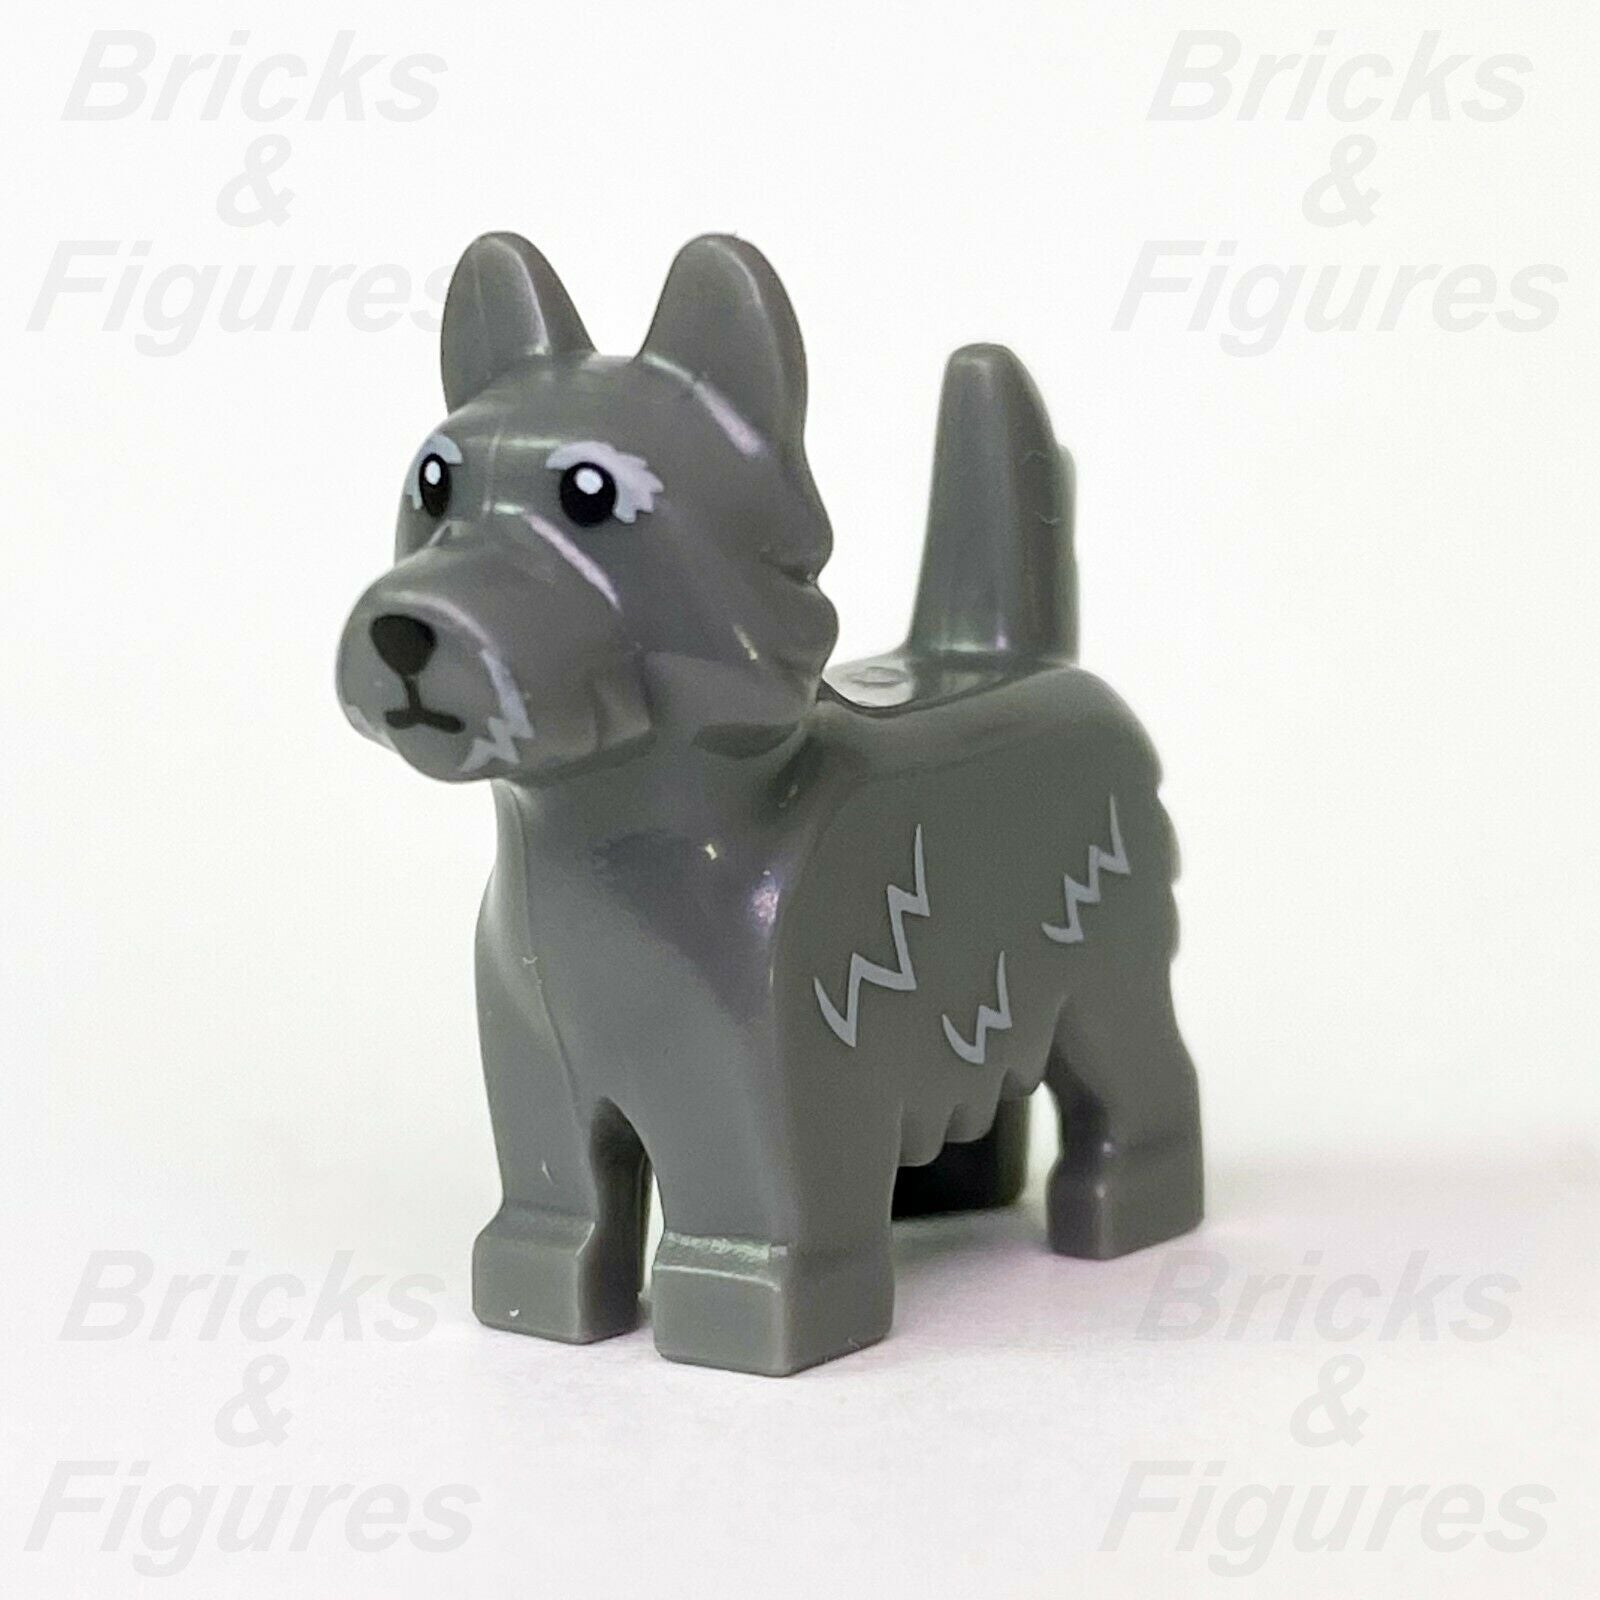 Collectible Minifigures LEGO Grey Terrier Dog (Toto) Animal Part 71023 - Bricks & Figures